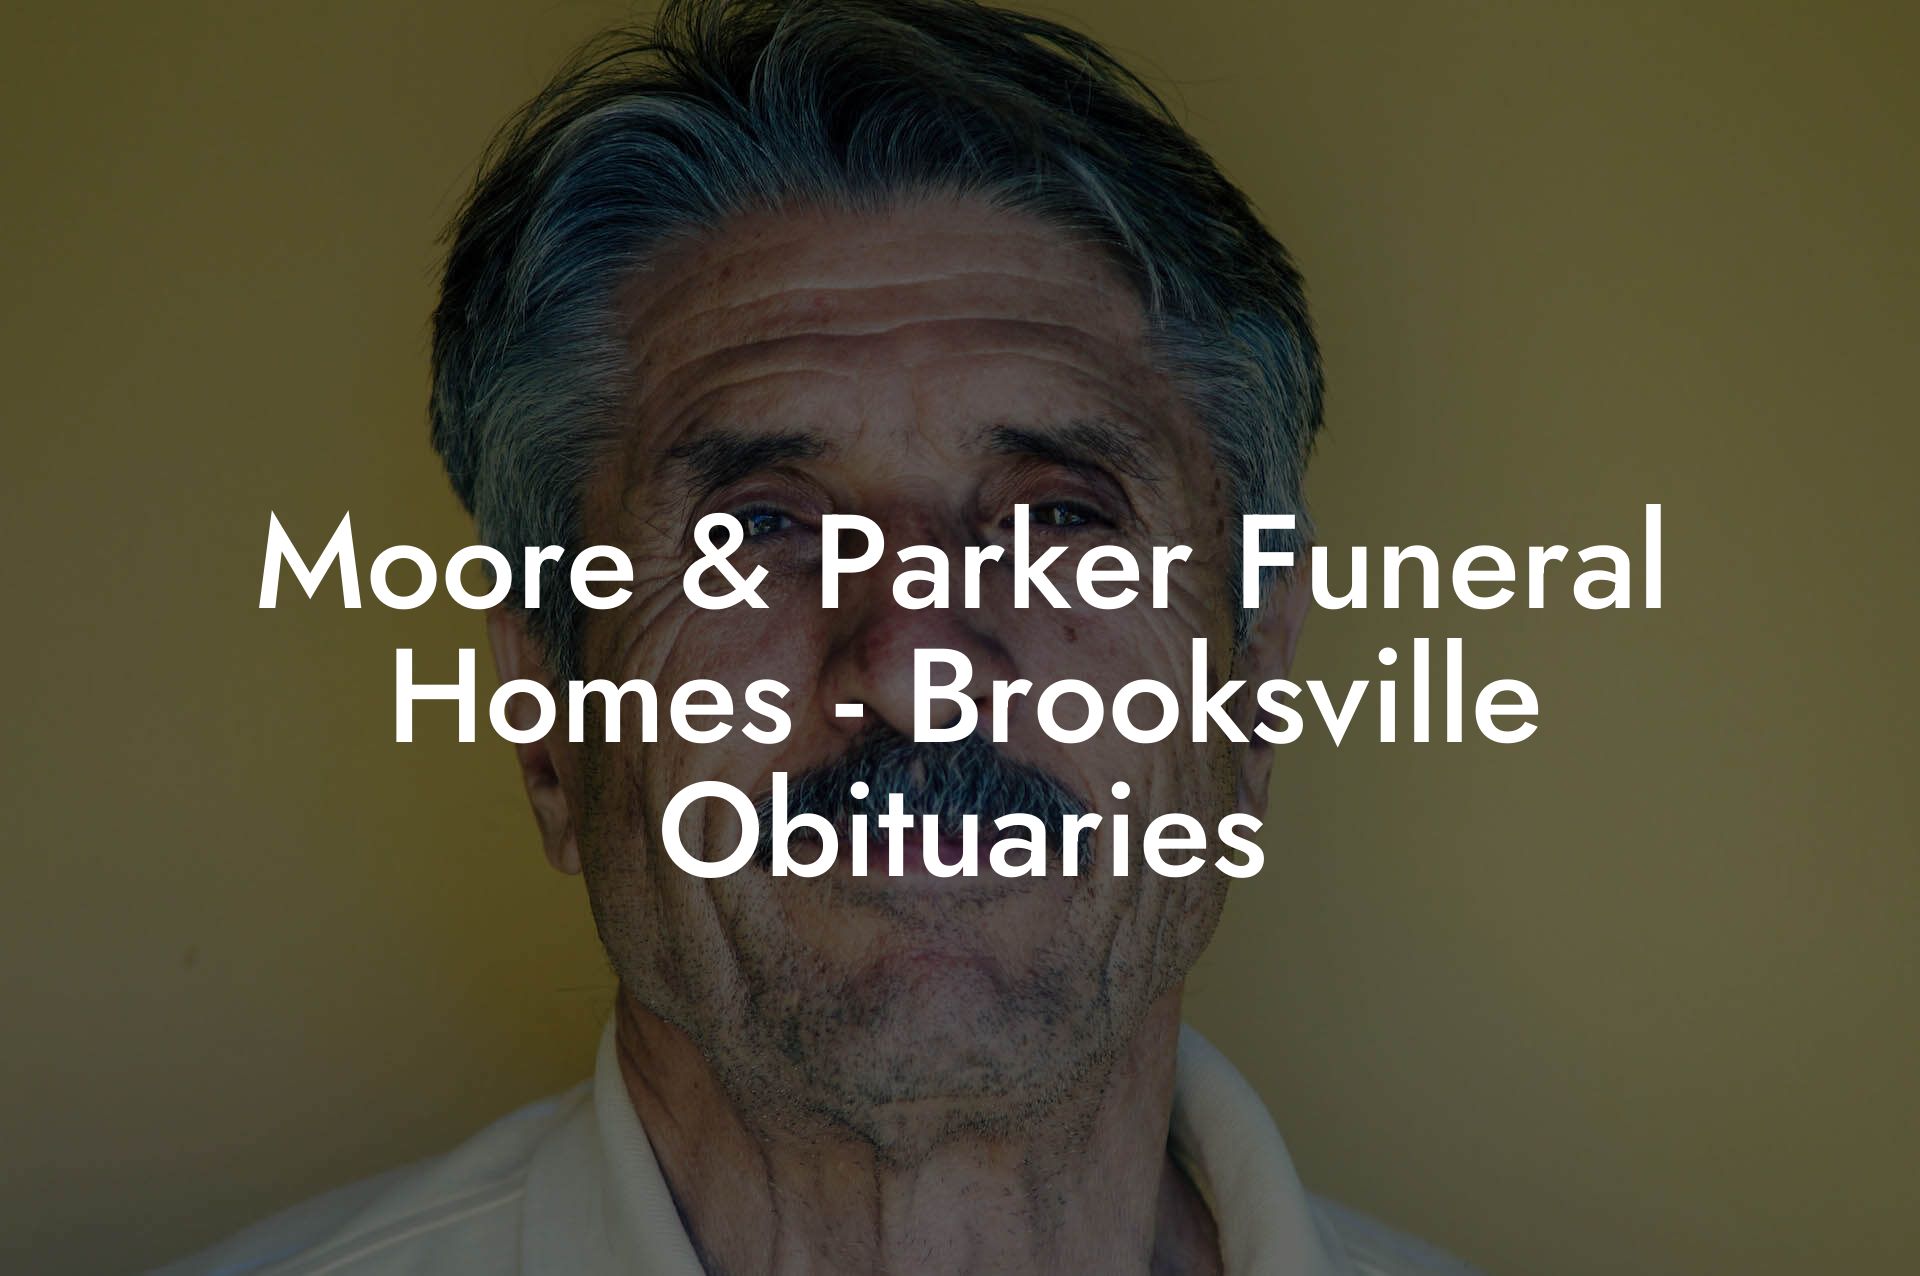 Moore & Parker Funeral Homes - Brooksville Obituaries